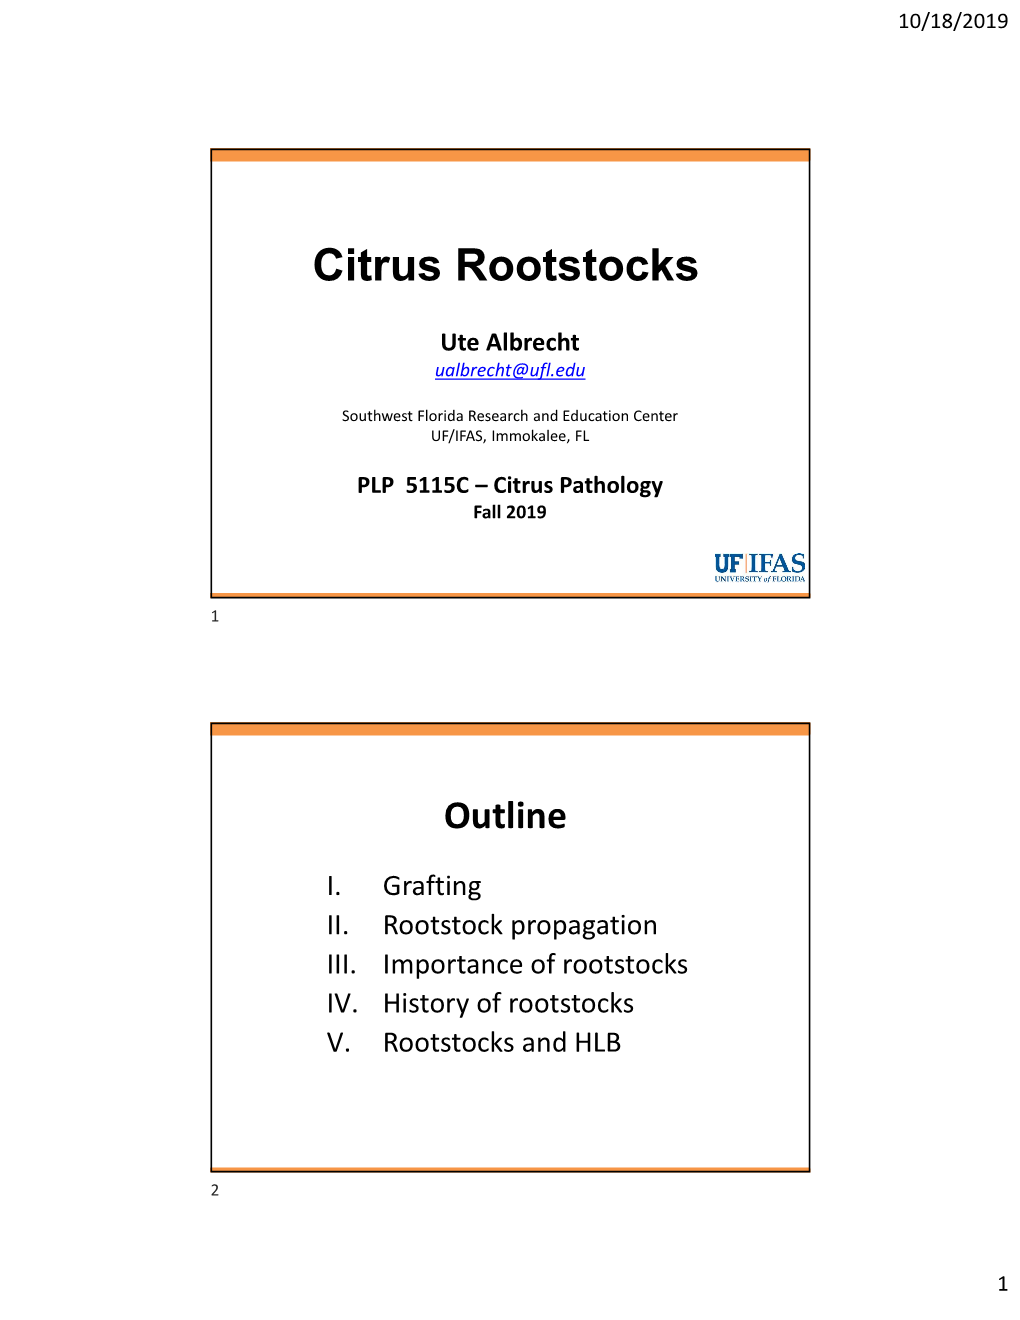 Citrus Rootstocks